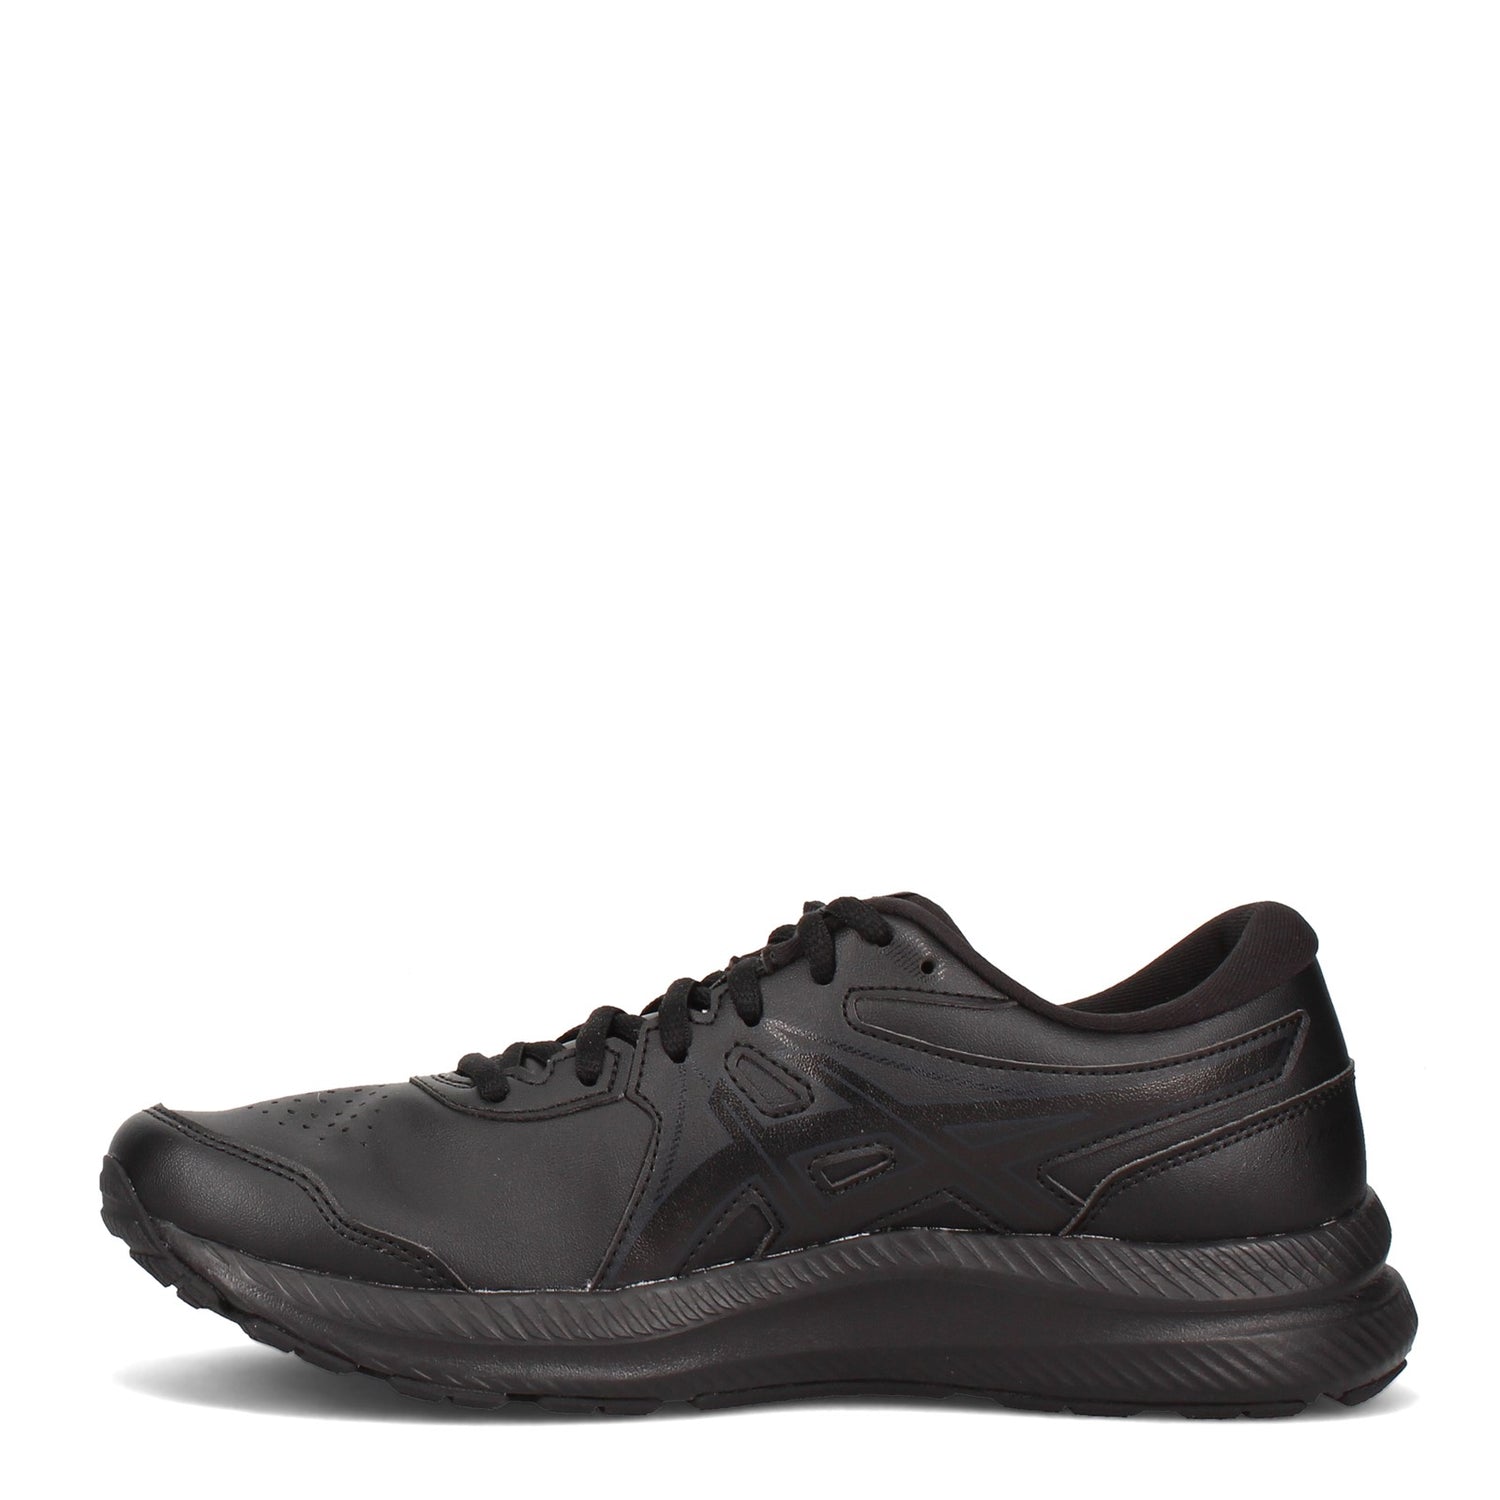 Peltz Shoes  Women's Asics Gel Contend SL Walking Shoe BLACK 1132A057.001